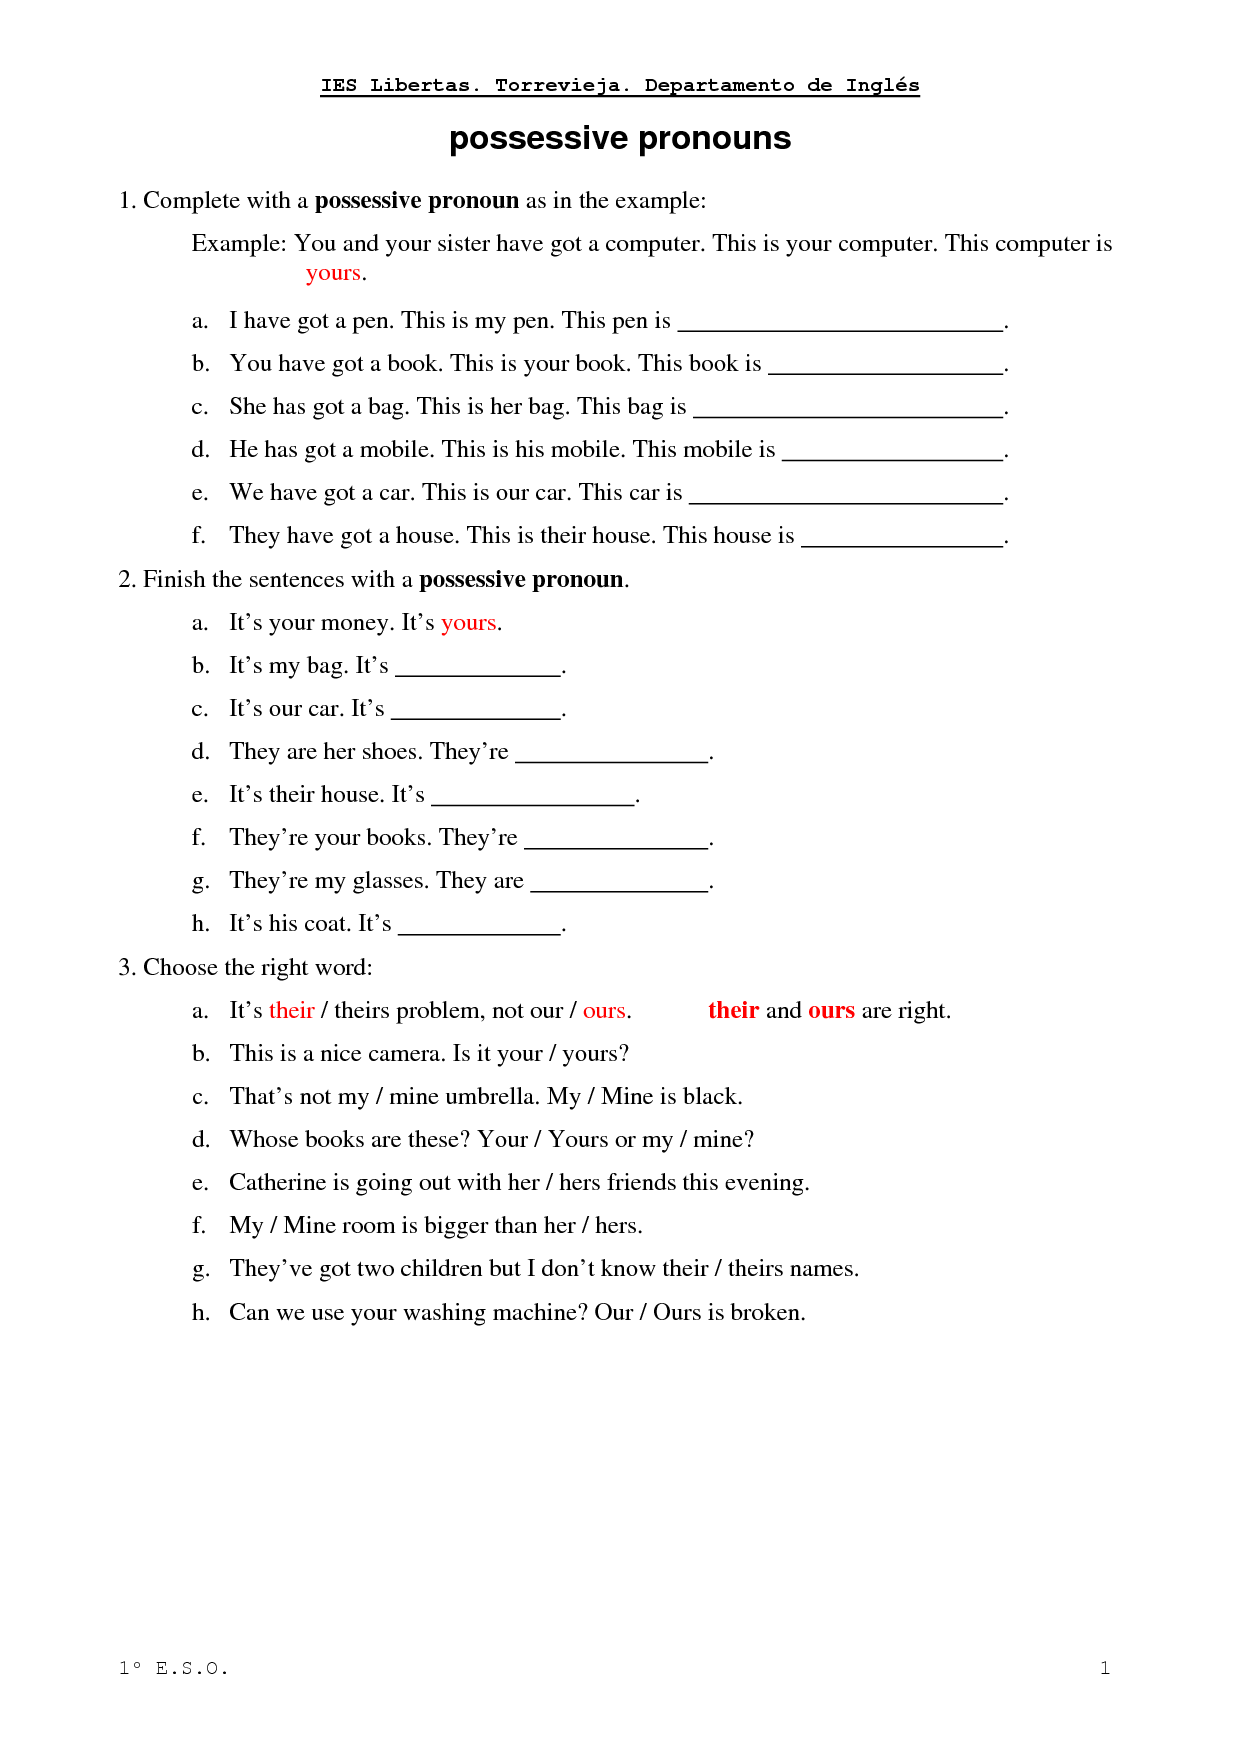 possessive-pronouns-online-pdf-worksheet-live-worksheets